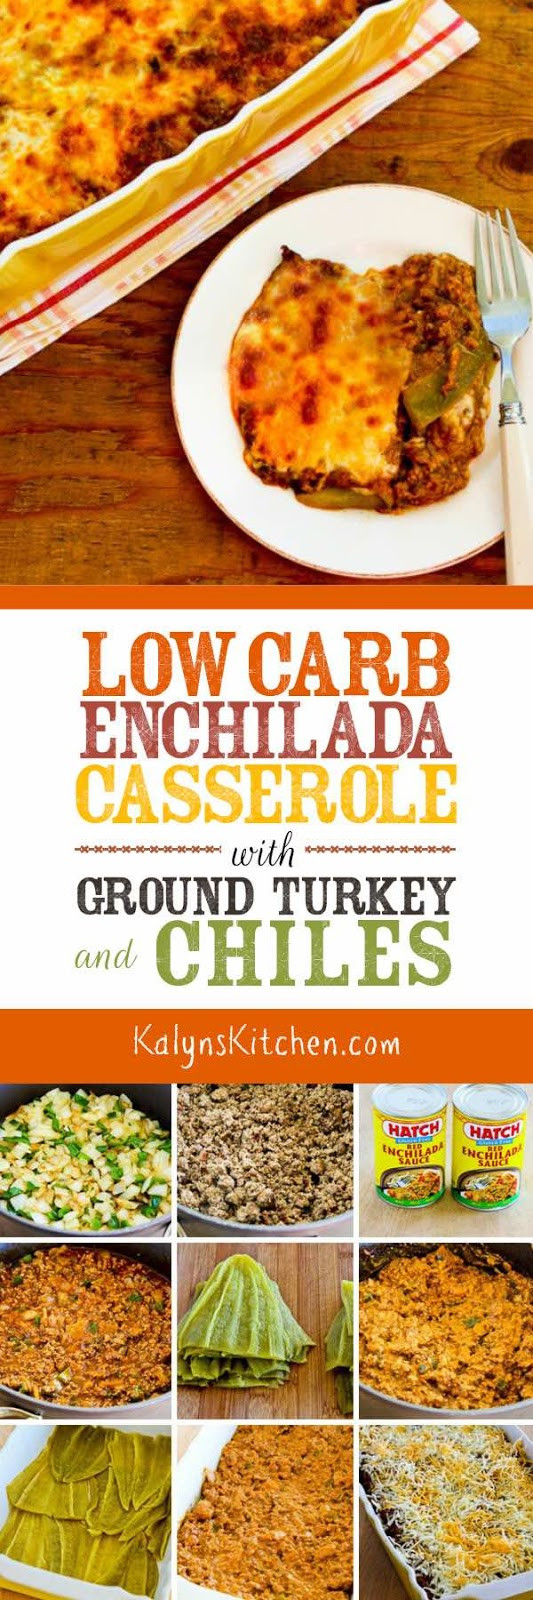 Ground Turkey Casserole Low Carb
 Low Carb Enchilada Casserole with Ground Turkey and Chiles